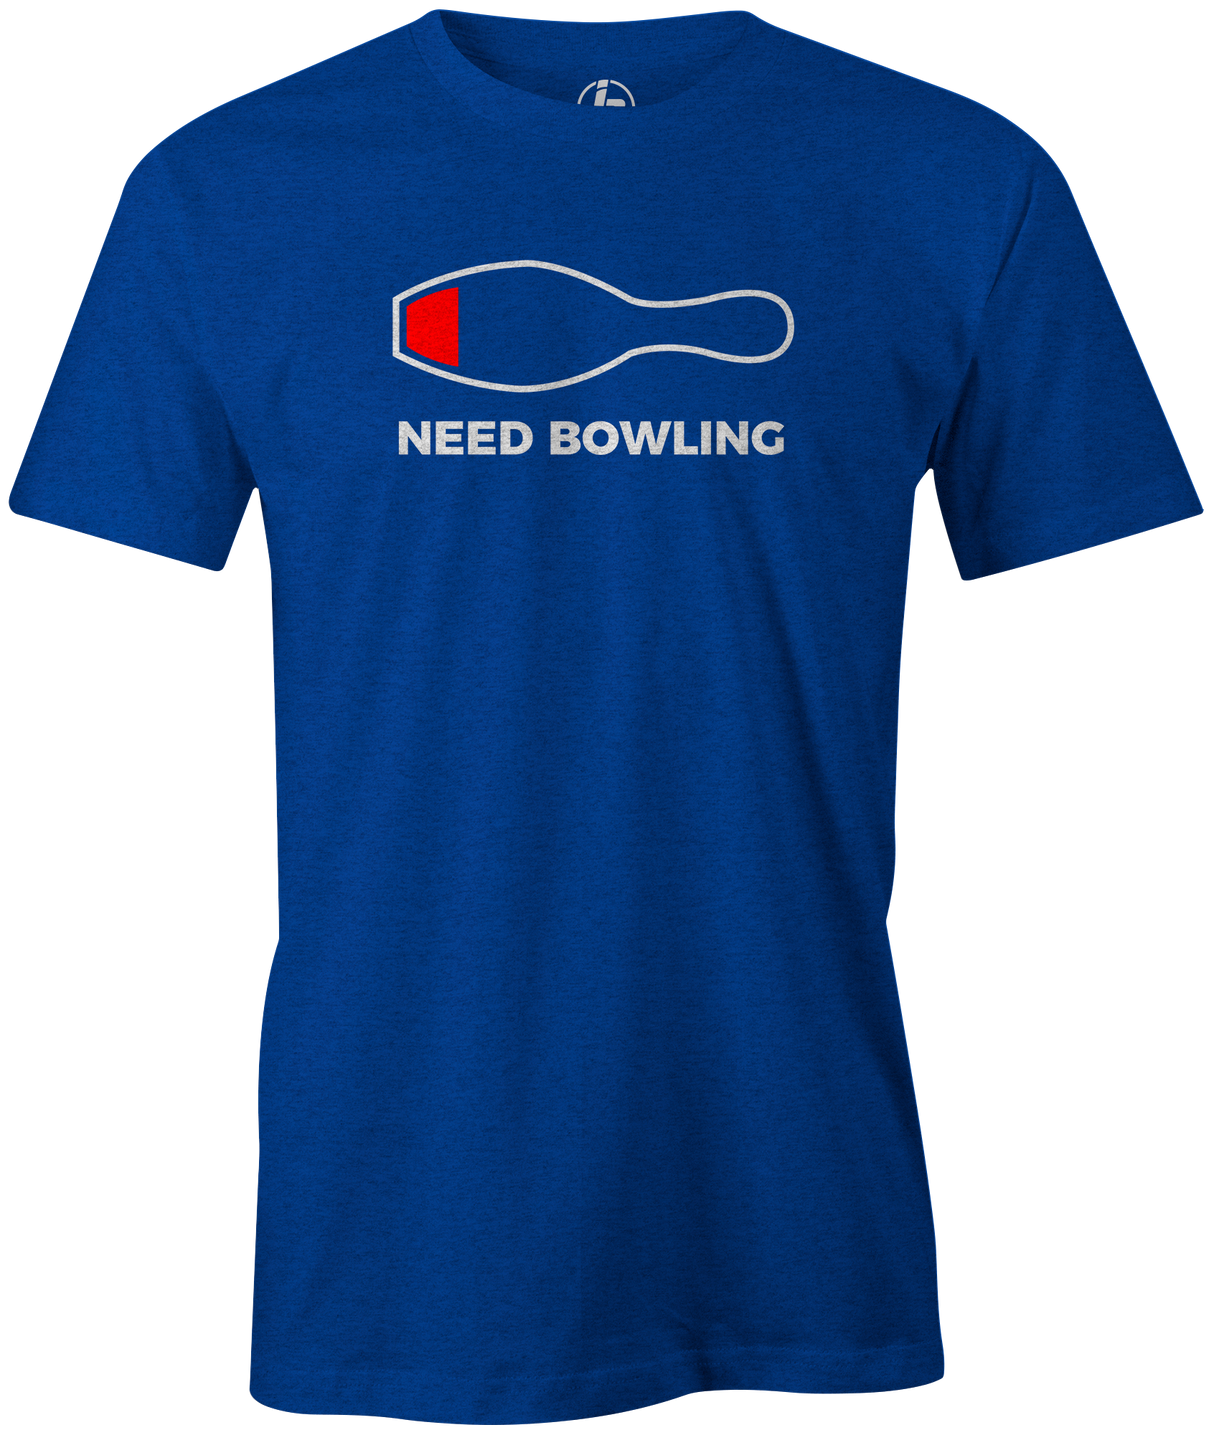 Need Bowling Men's Shirt, Blue, Funny, cool, novelty, tee, tee-shirt, t-shirt, tshirt